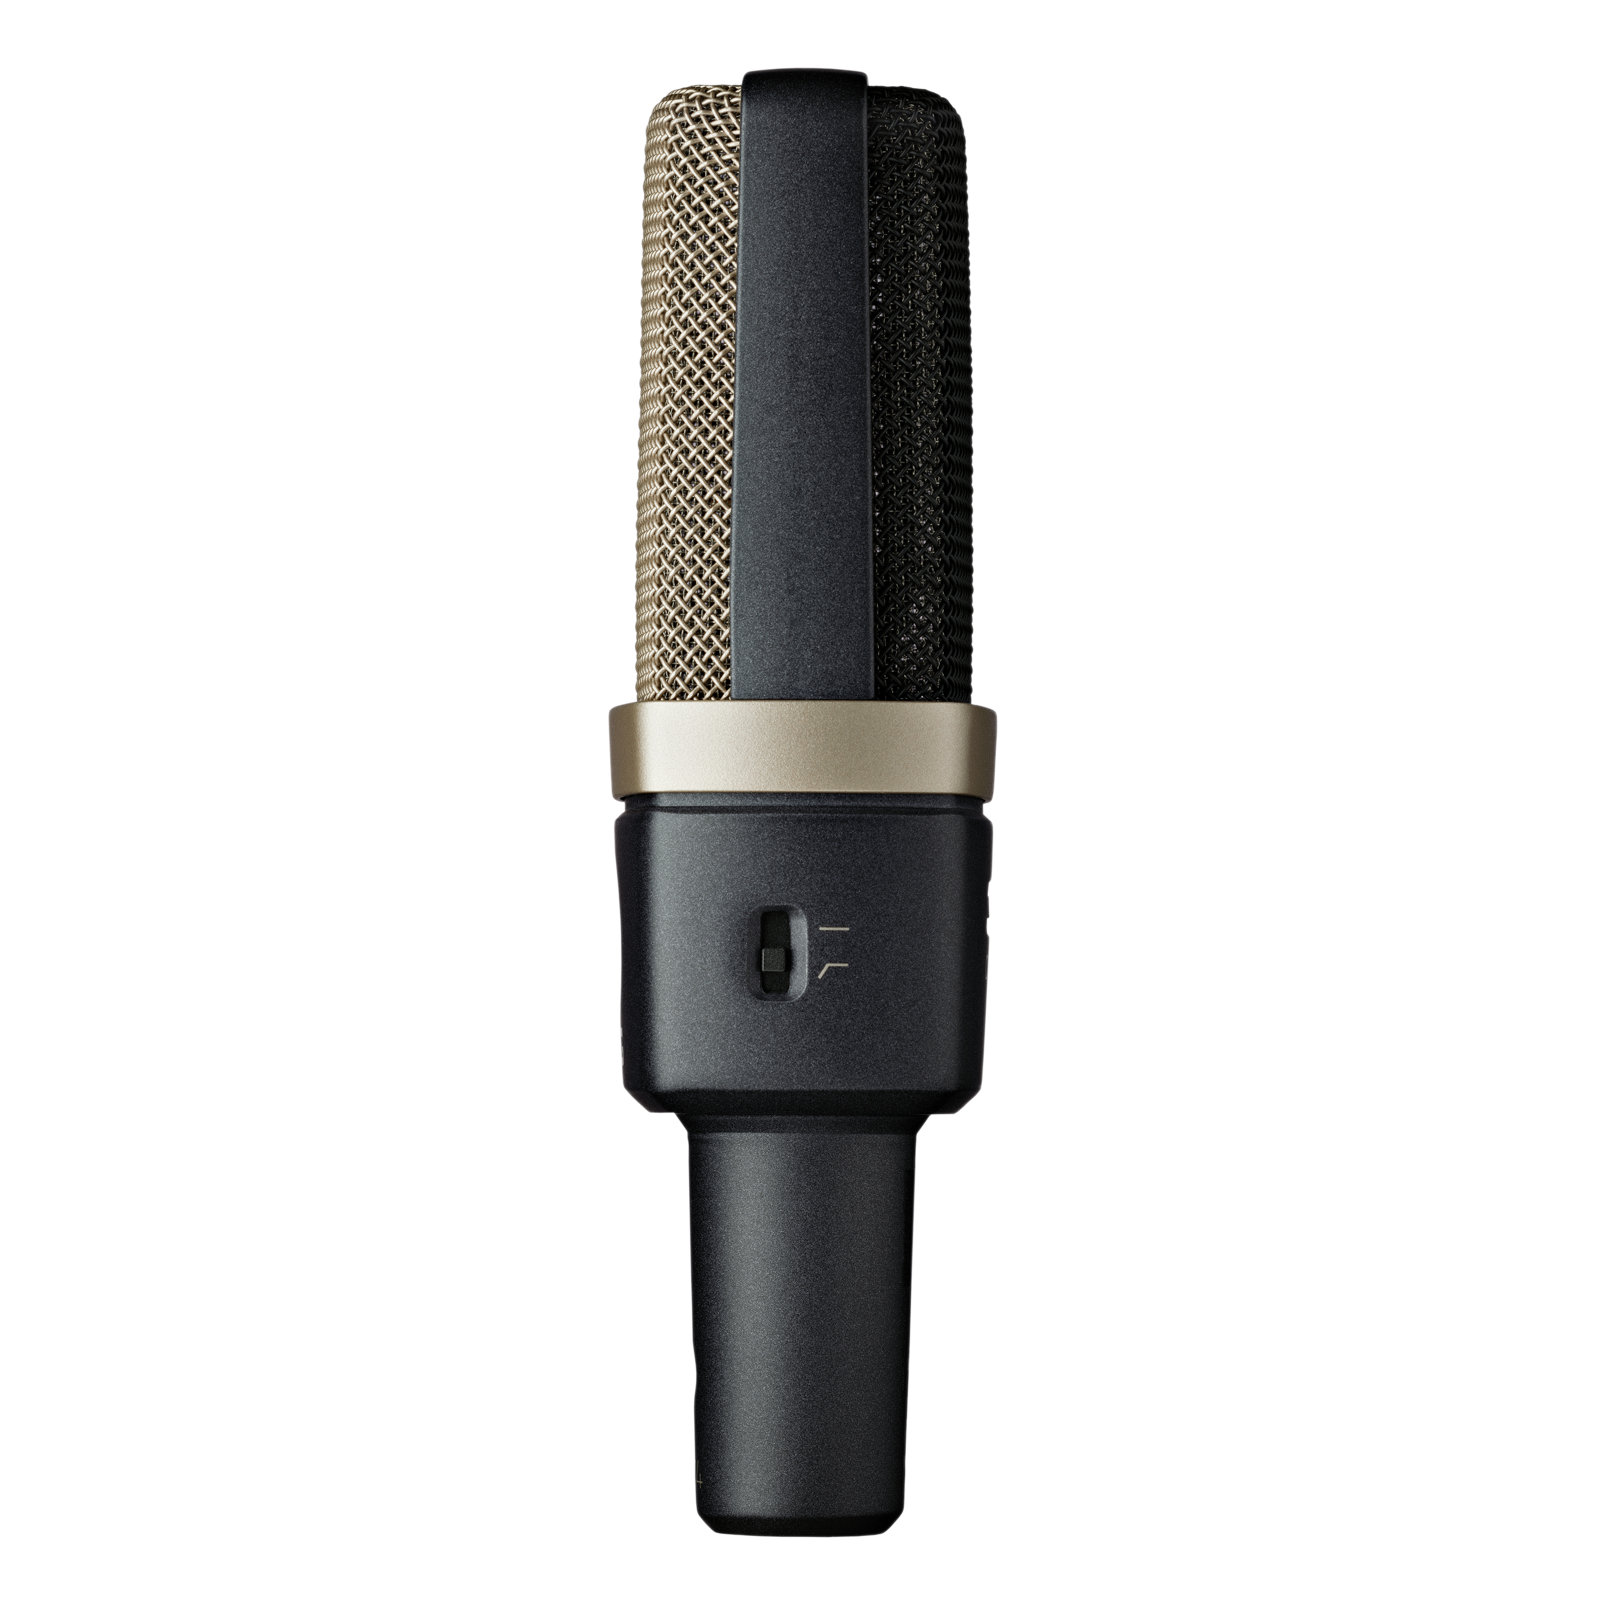 C314 - Black - Professional multi-pattern condenser microphone - Detailshot 2